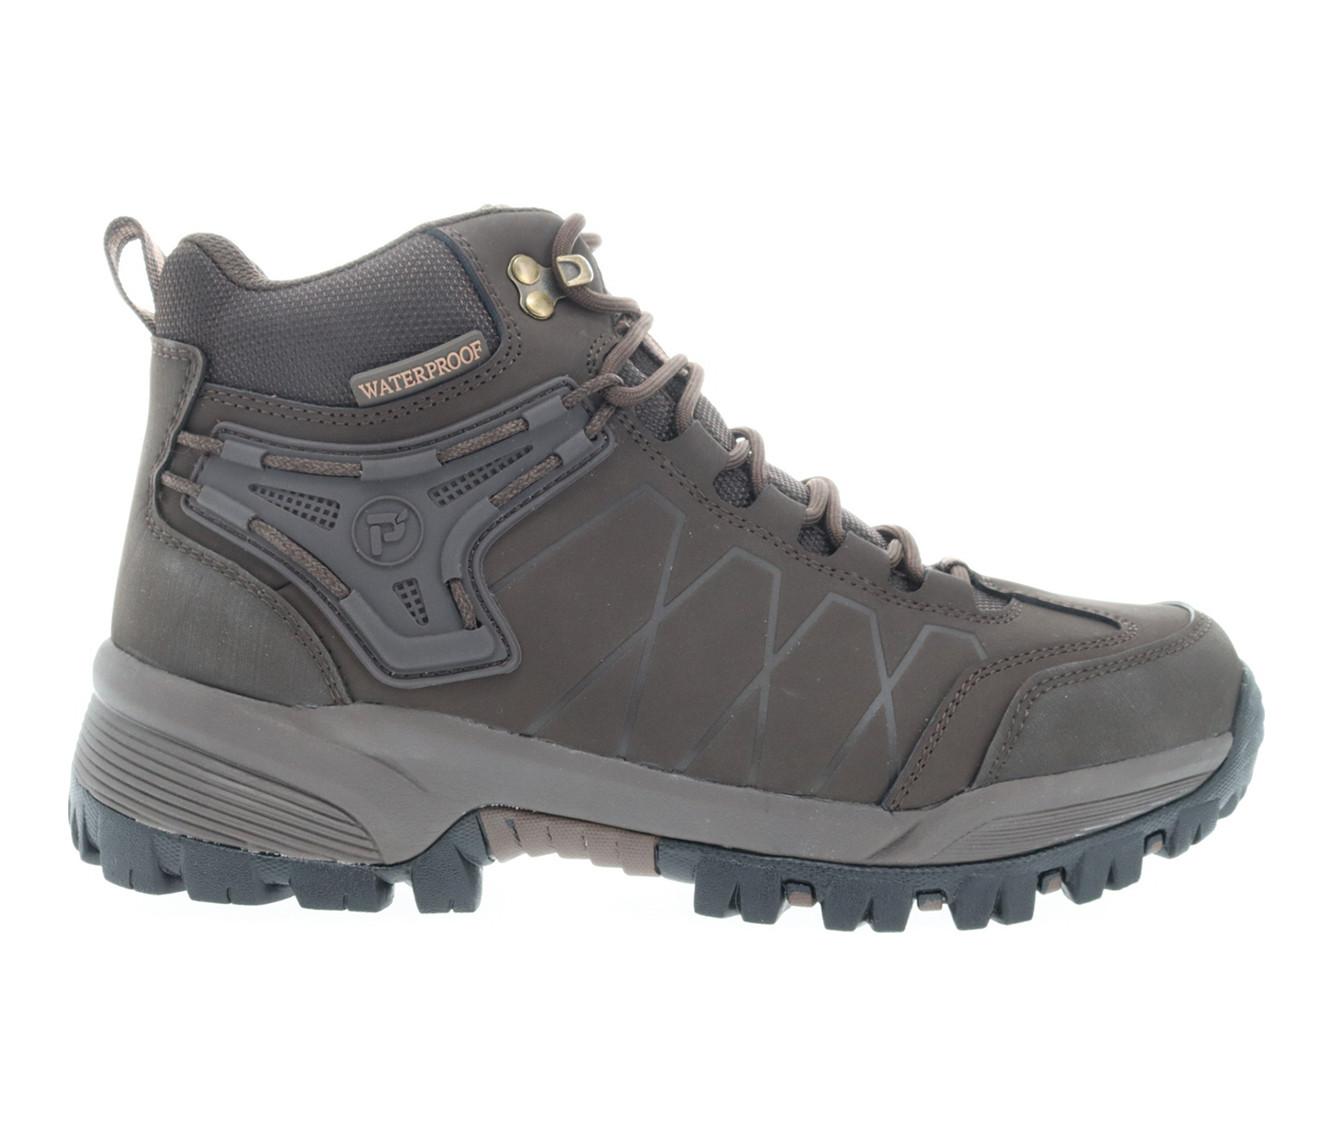 Men's Propet Ridge Walker Force Waterproof Hiking Boots